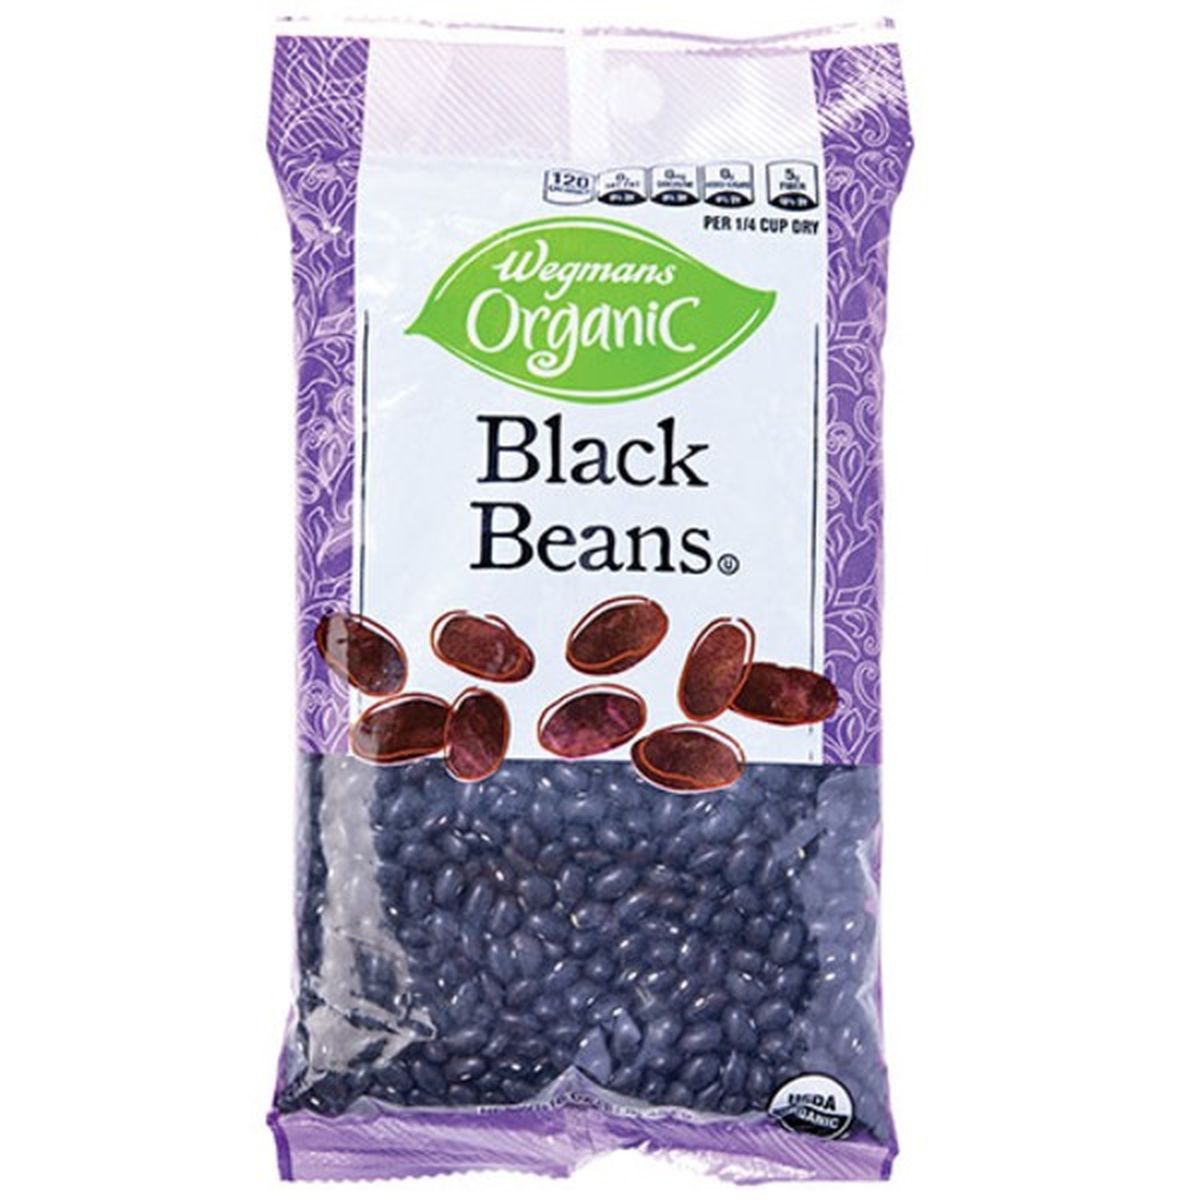 Calories in Wegmans Organic Black Beans, Dry